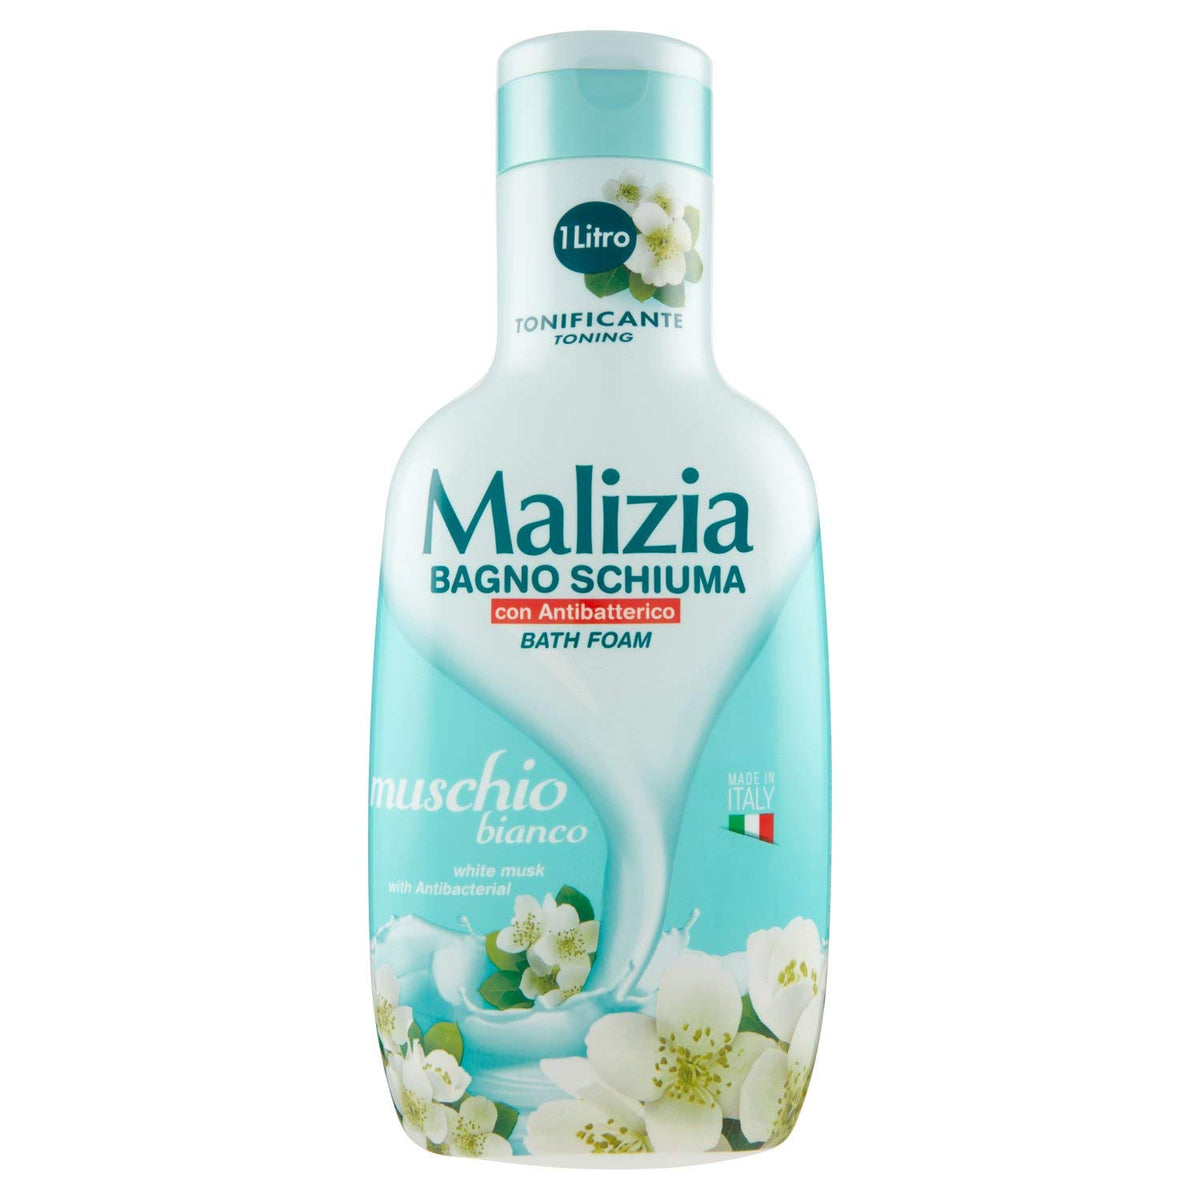 Malizia Bath-Foam - White musk with Anti bacterial - 1000ml